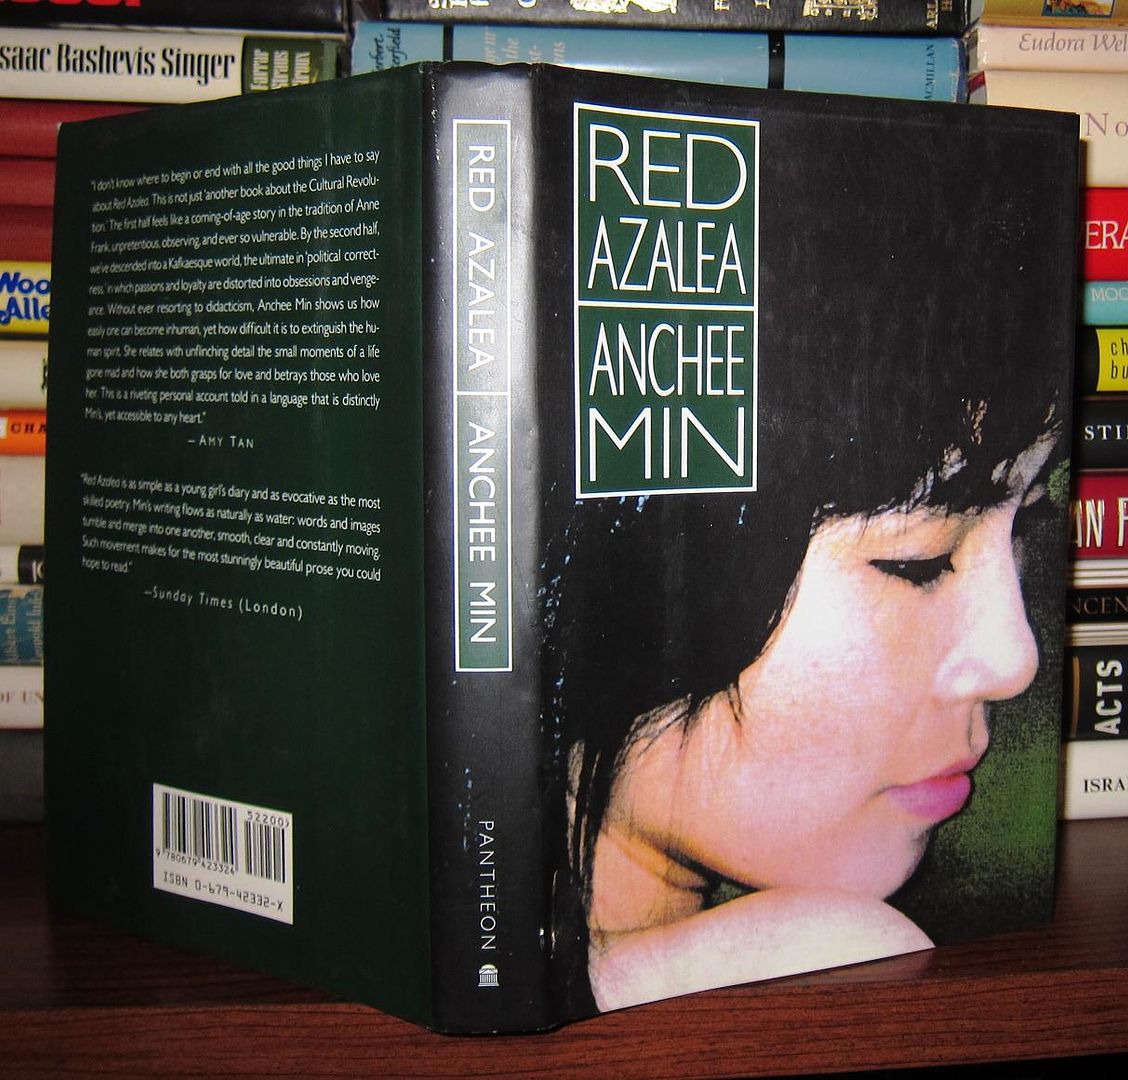 MIN, ANCHEE - Red Azalea